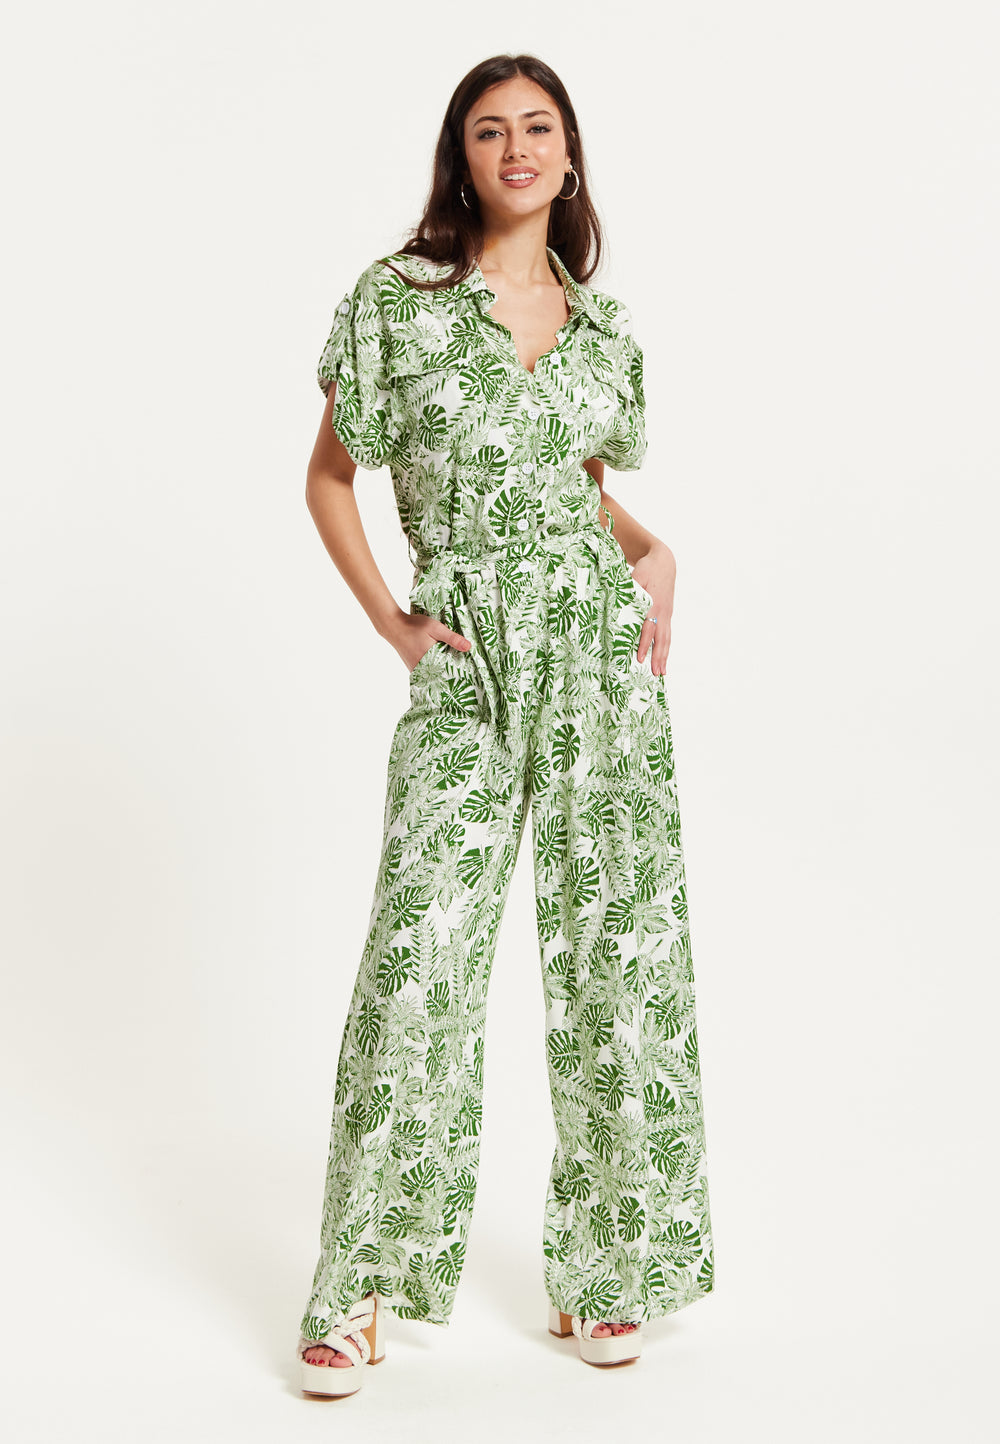 Liquorish Green Leaf Printed Jumpsuit